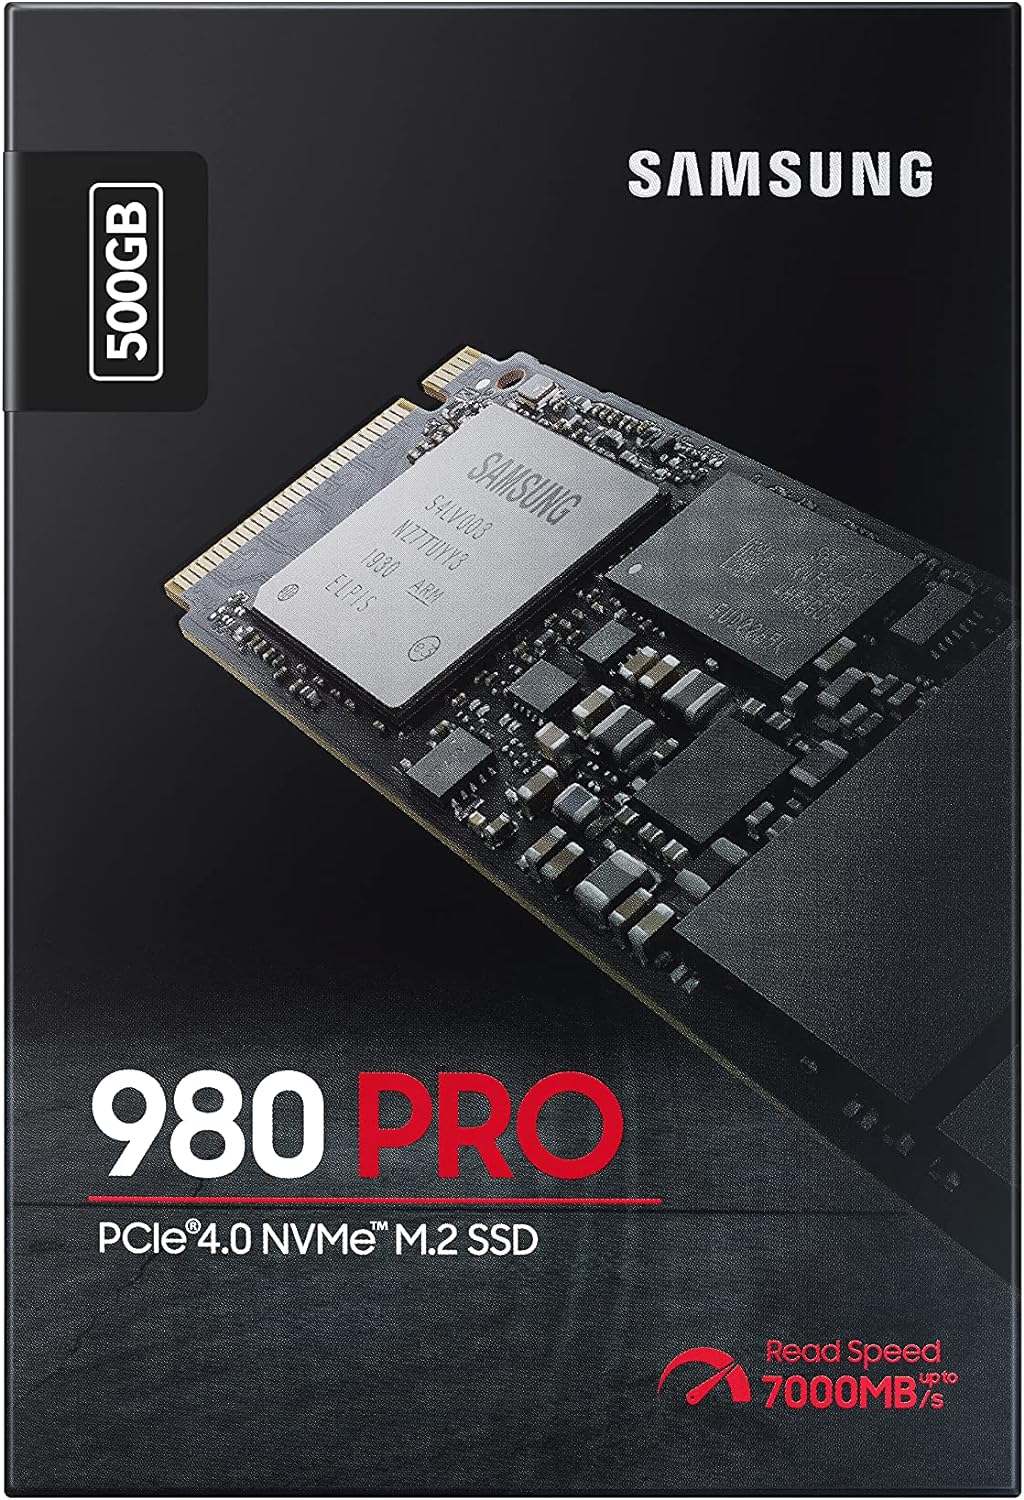 SAMSUNG 980 PRO PCIe 500GB NVMe 